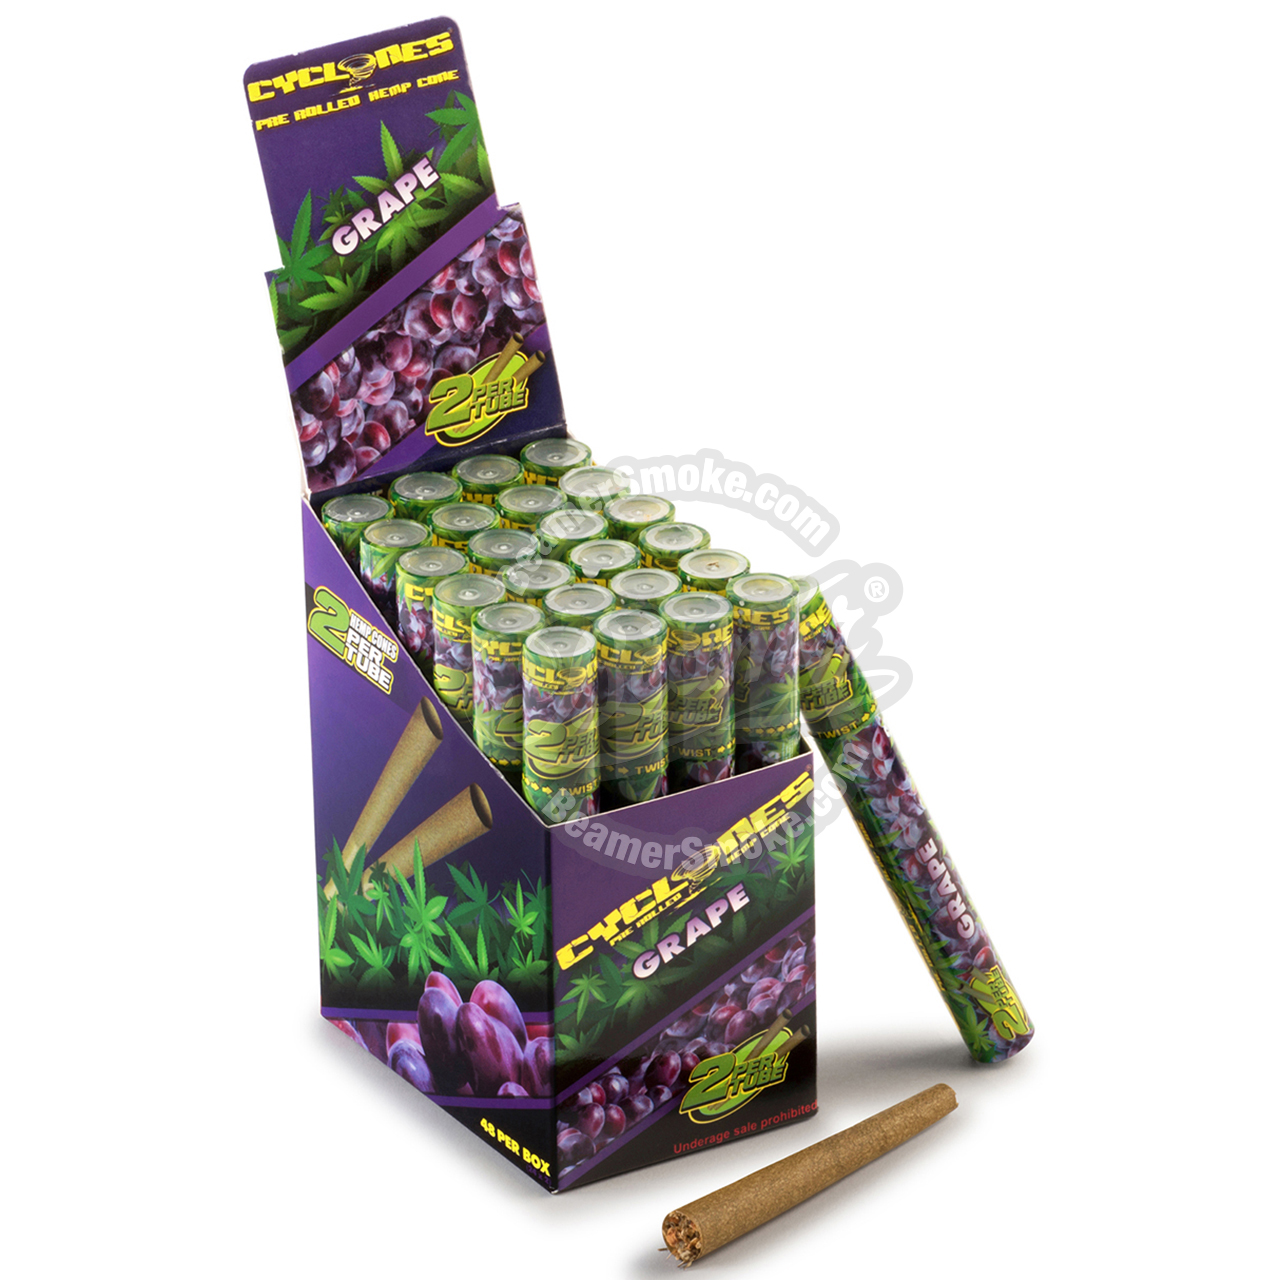 Cyclones Grape Hemp Cones - 2 Count Pack